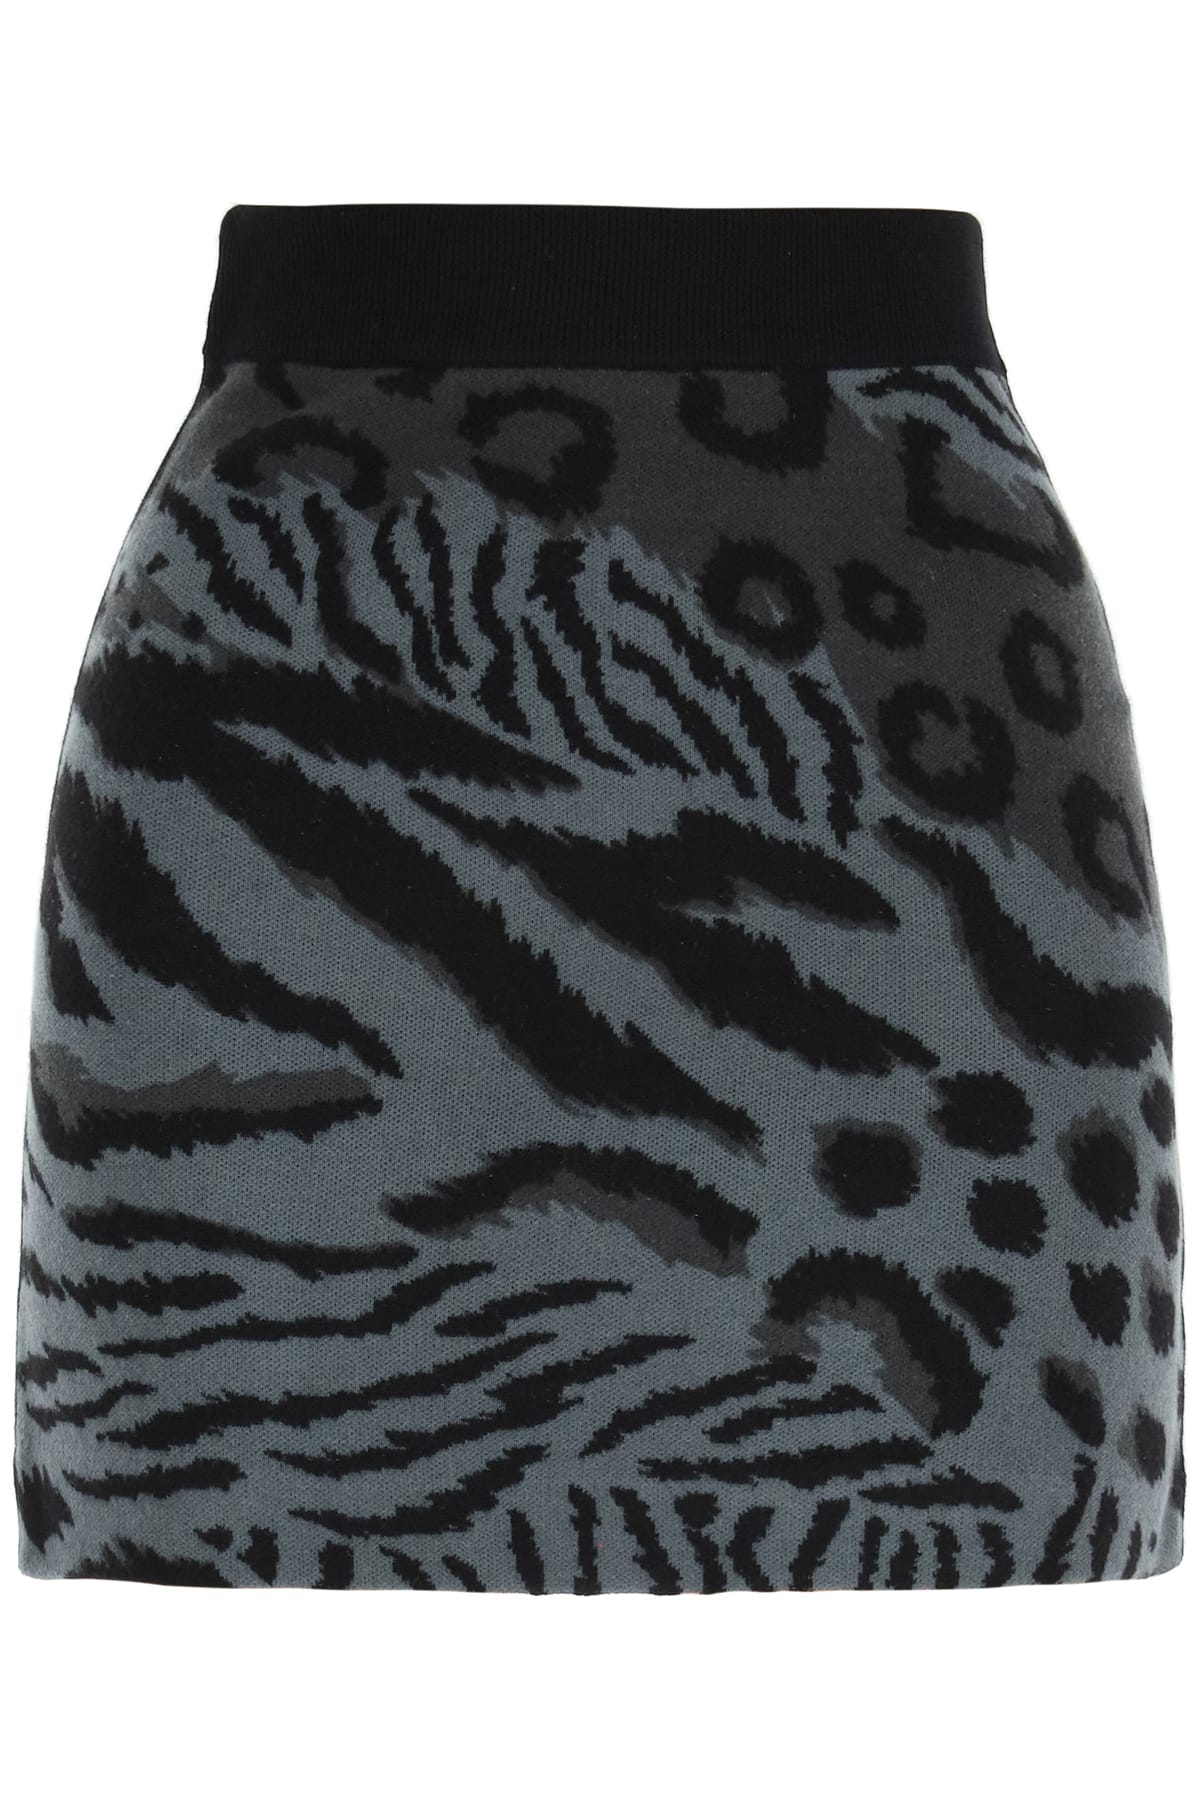 Kenzo Leopard Mini Skirt